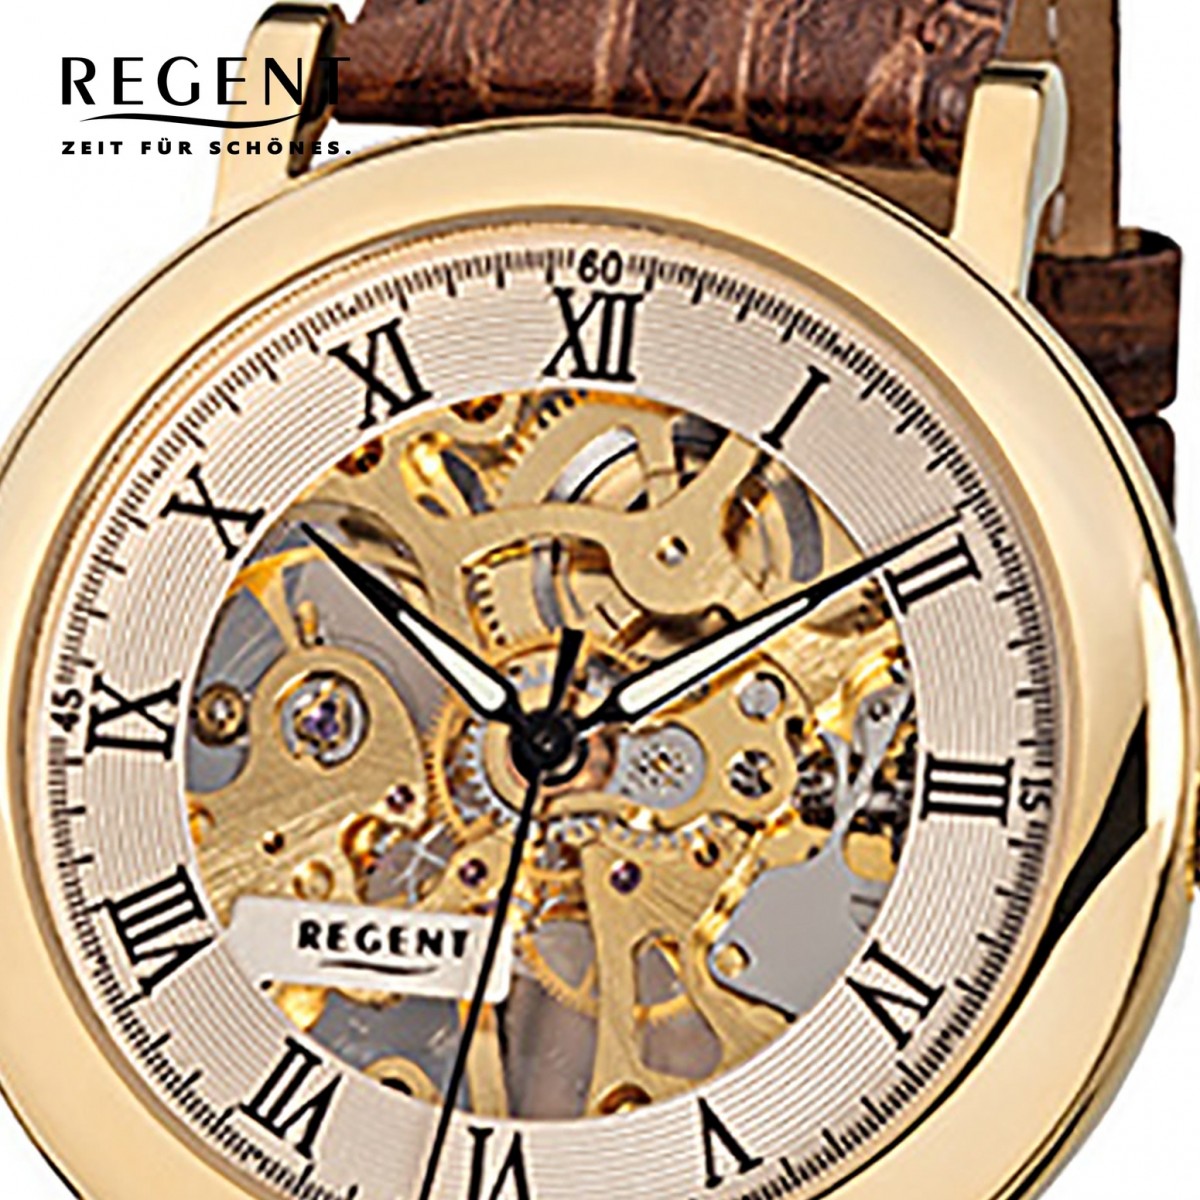 Regent Herren-Armbanduhr Mineralglas Handaufzug Leder braun mechanisch  F-1390 URF758